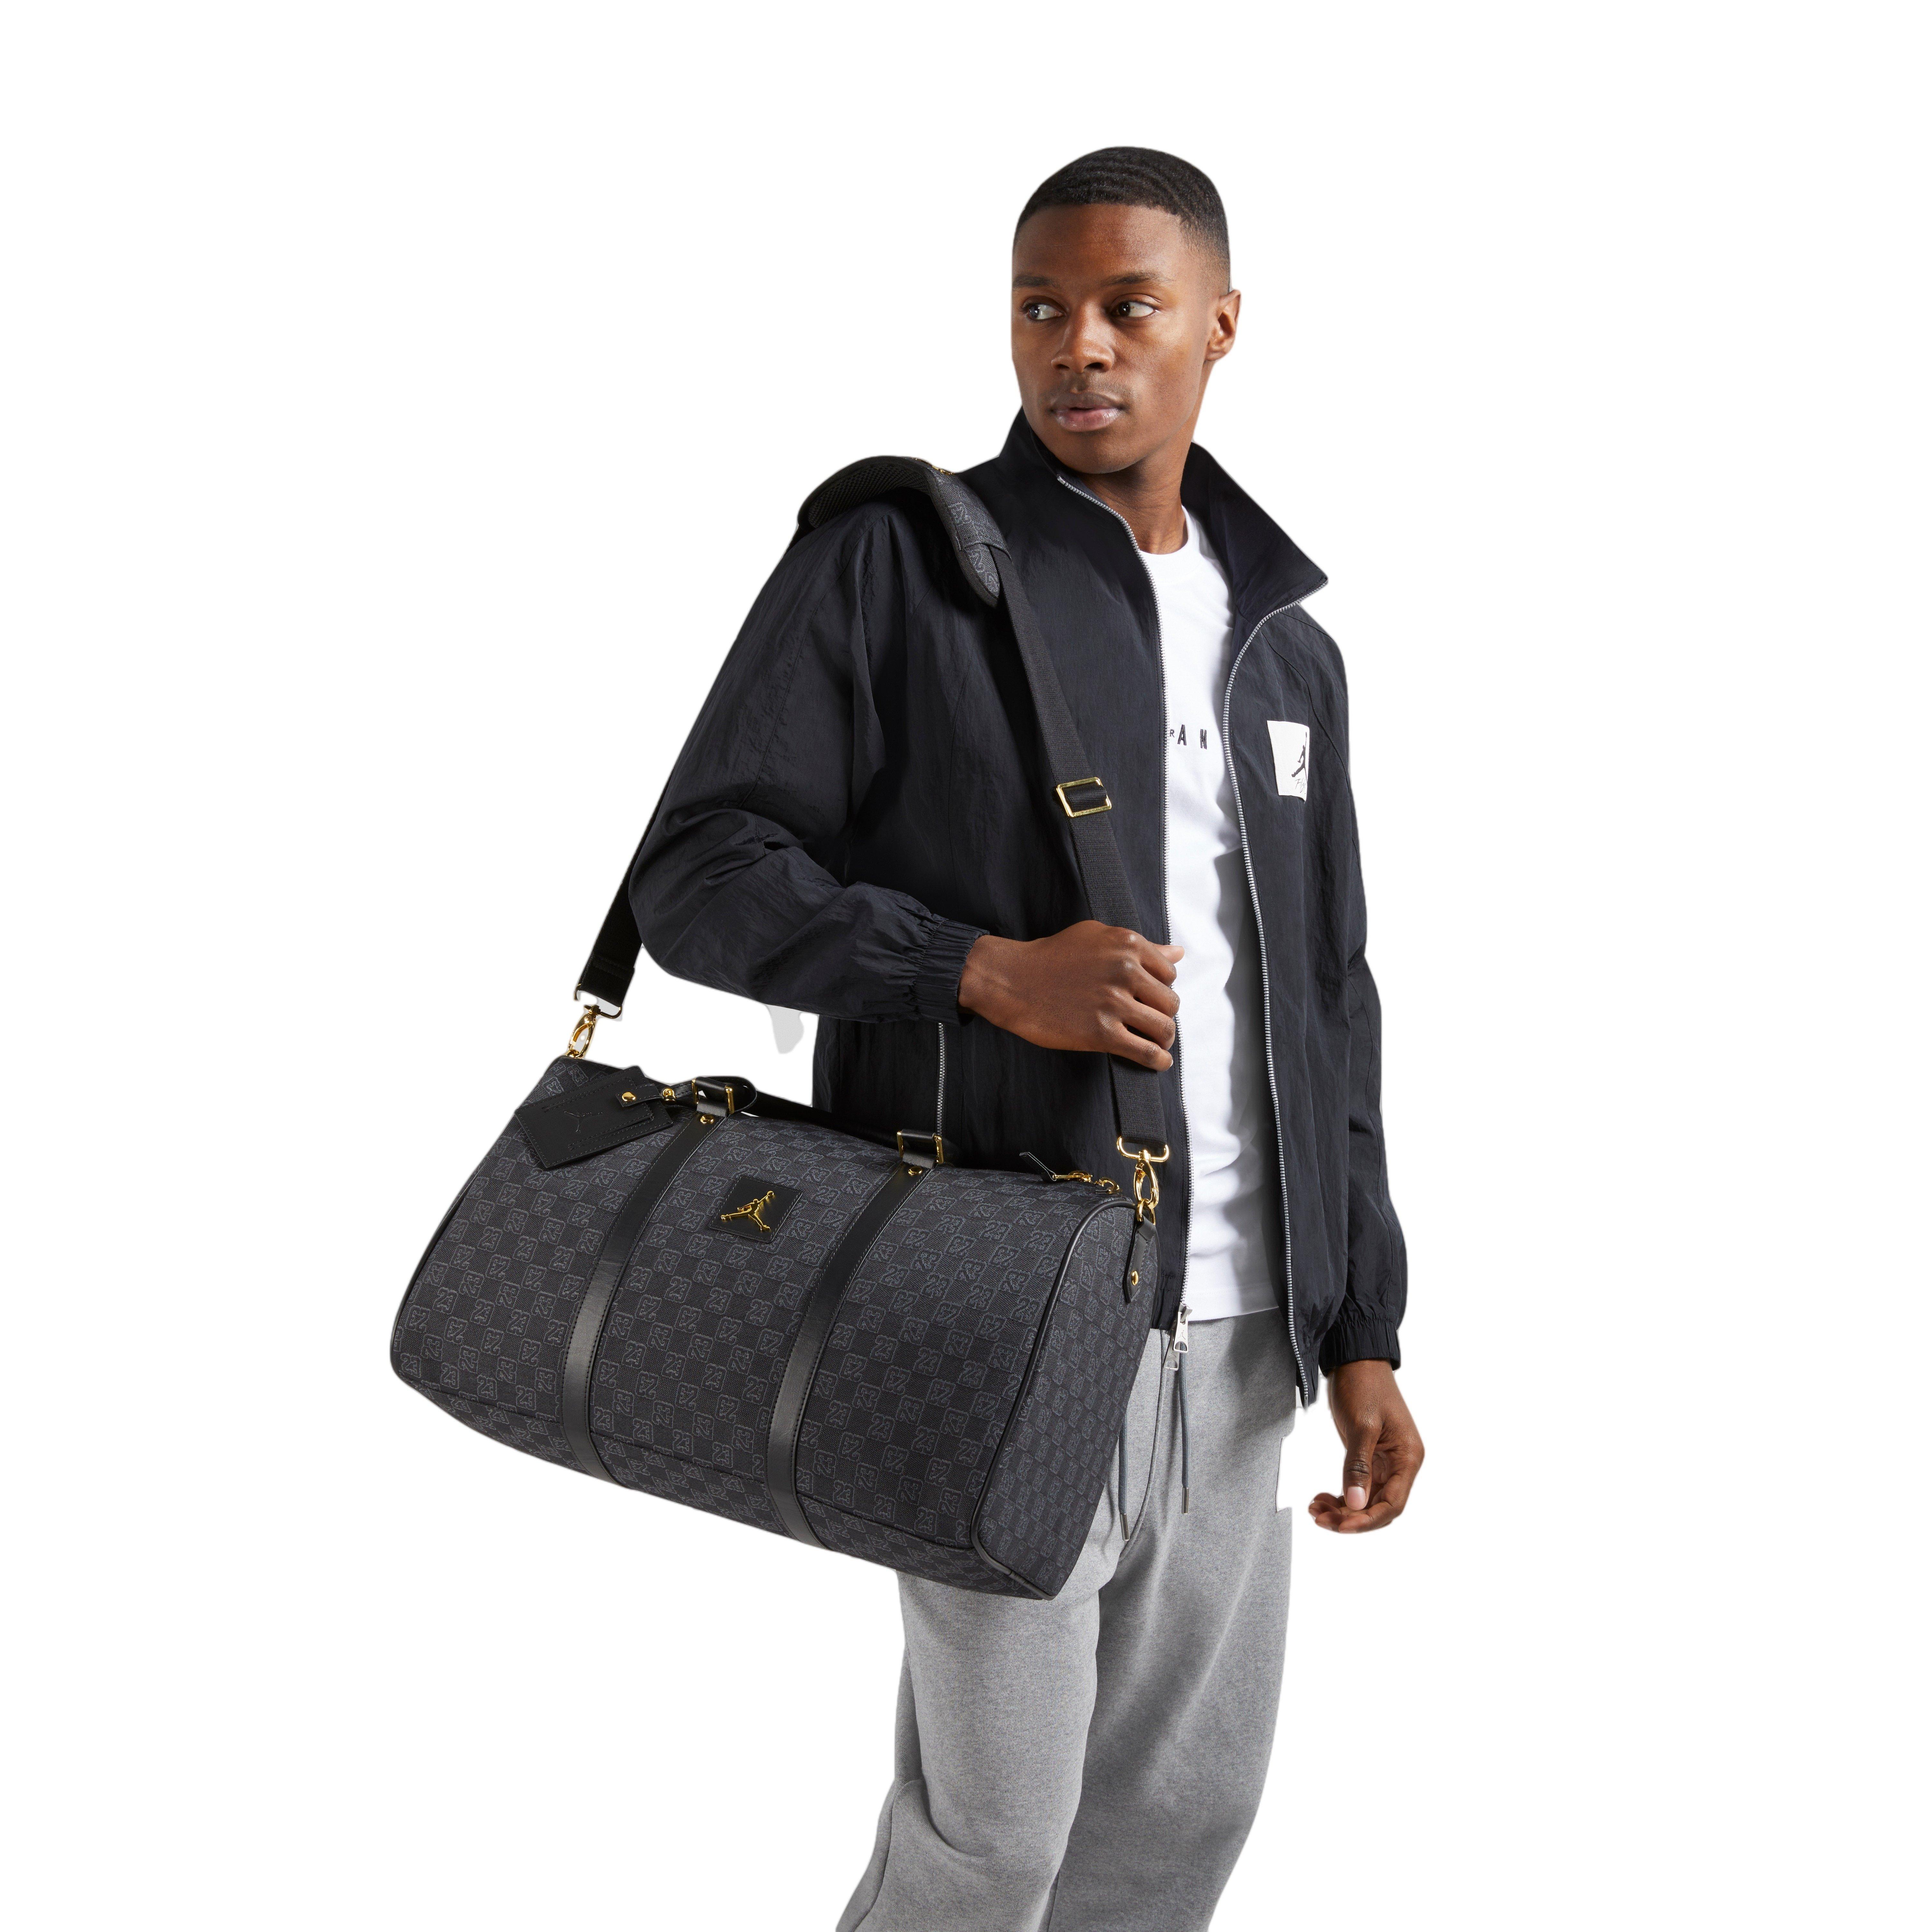 Nike Jordan Monogram Duffle Bag - Sold Out Nike Fashion Backpack Travel  Black